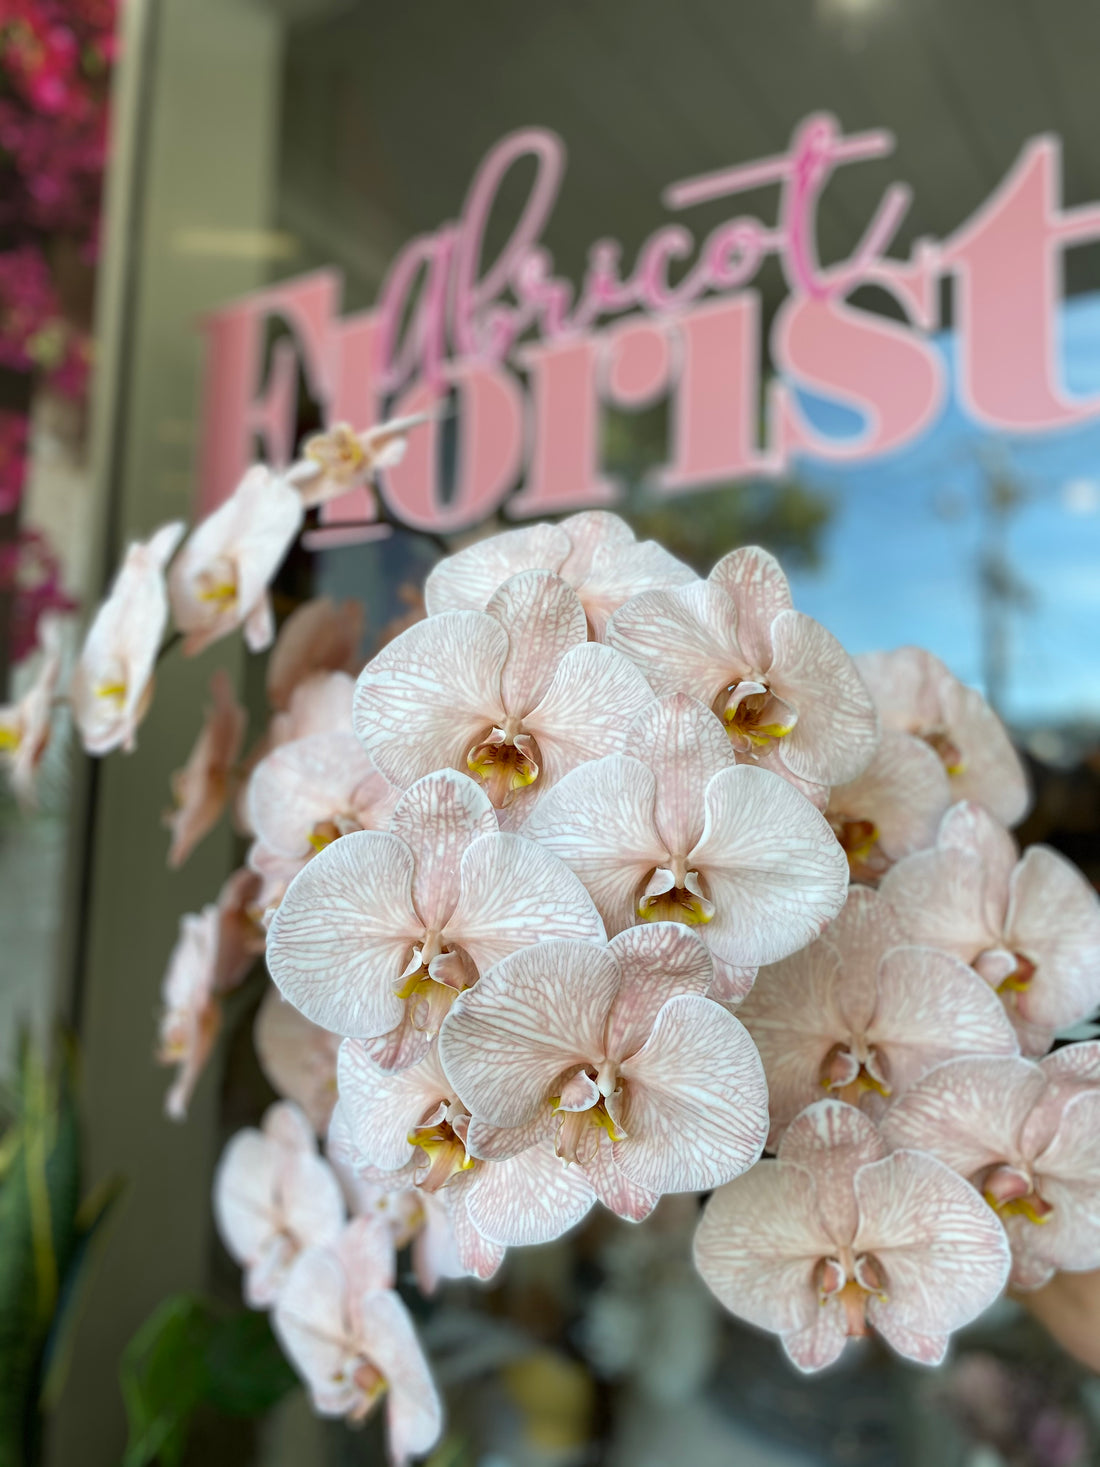 Mornington Peninsula's Only Florist Based in 2 Locations: Mornington & Mount Eliza Florists